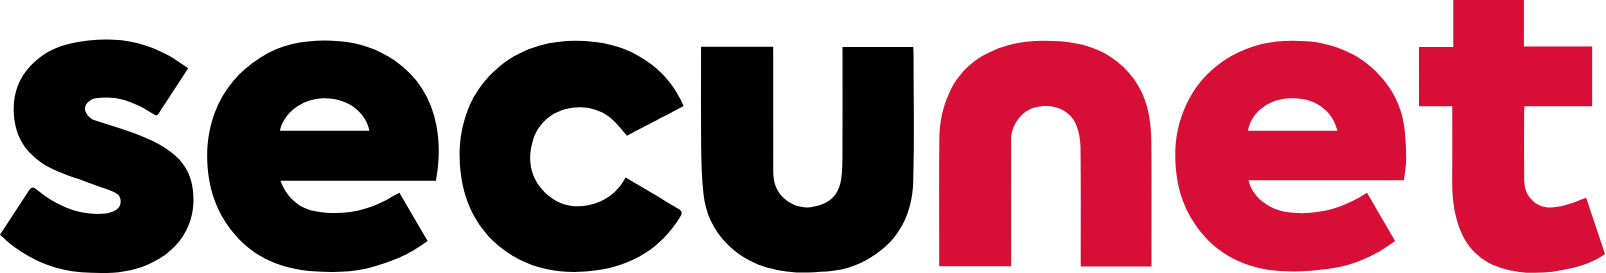 secunet logo large (transparent PNG)